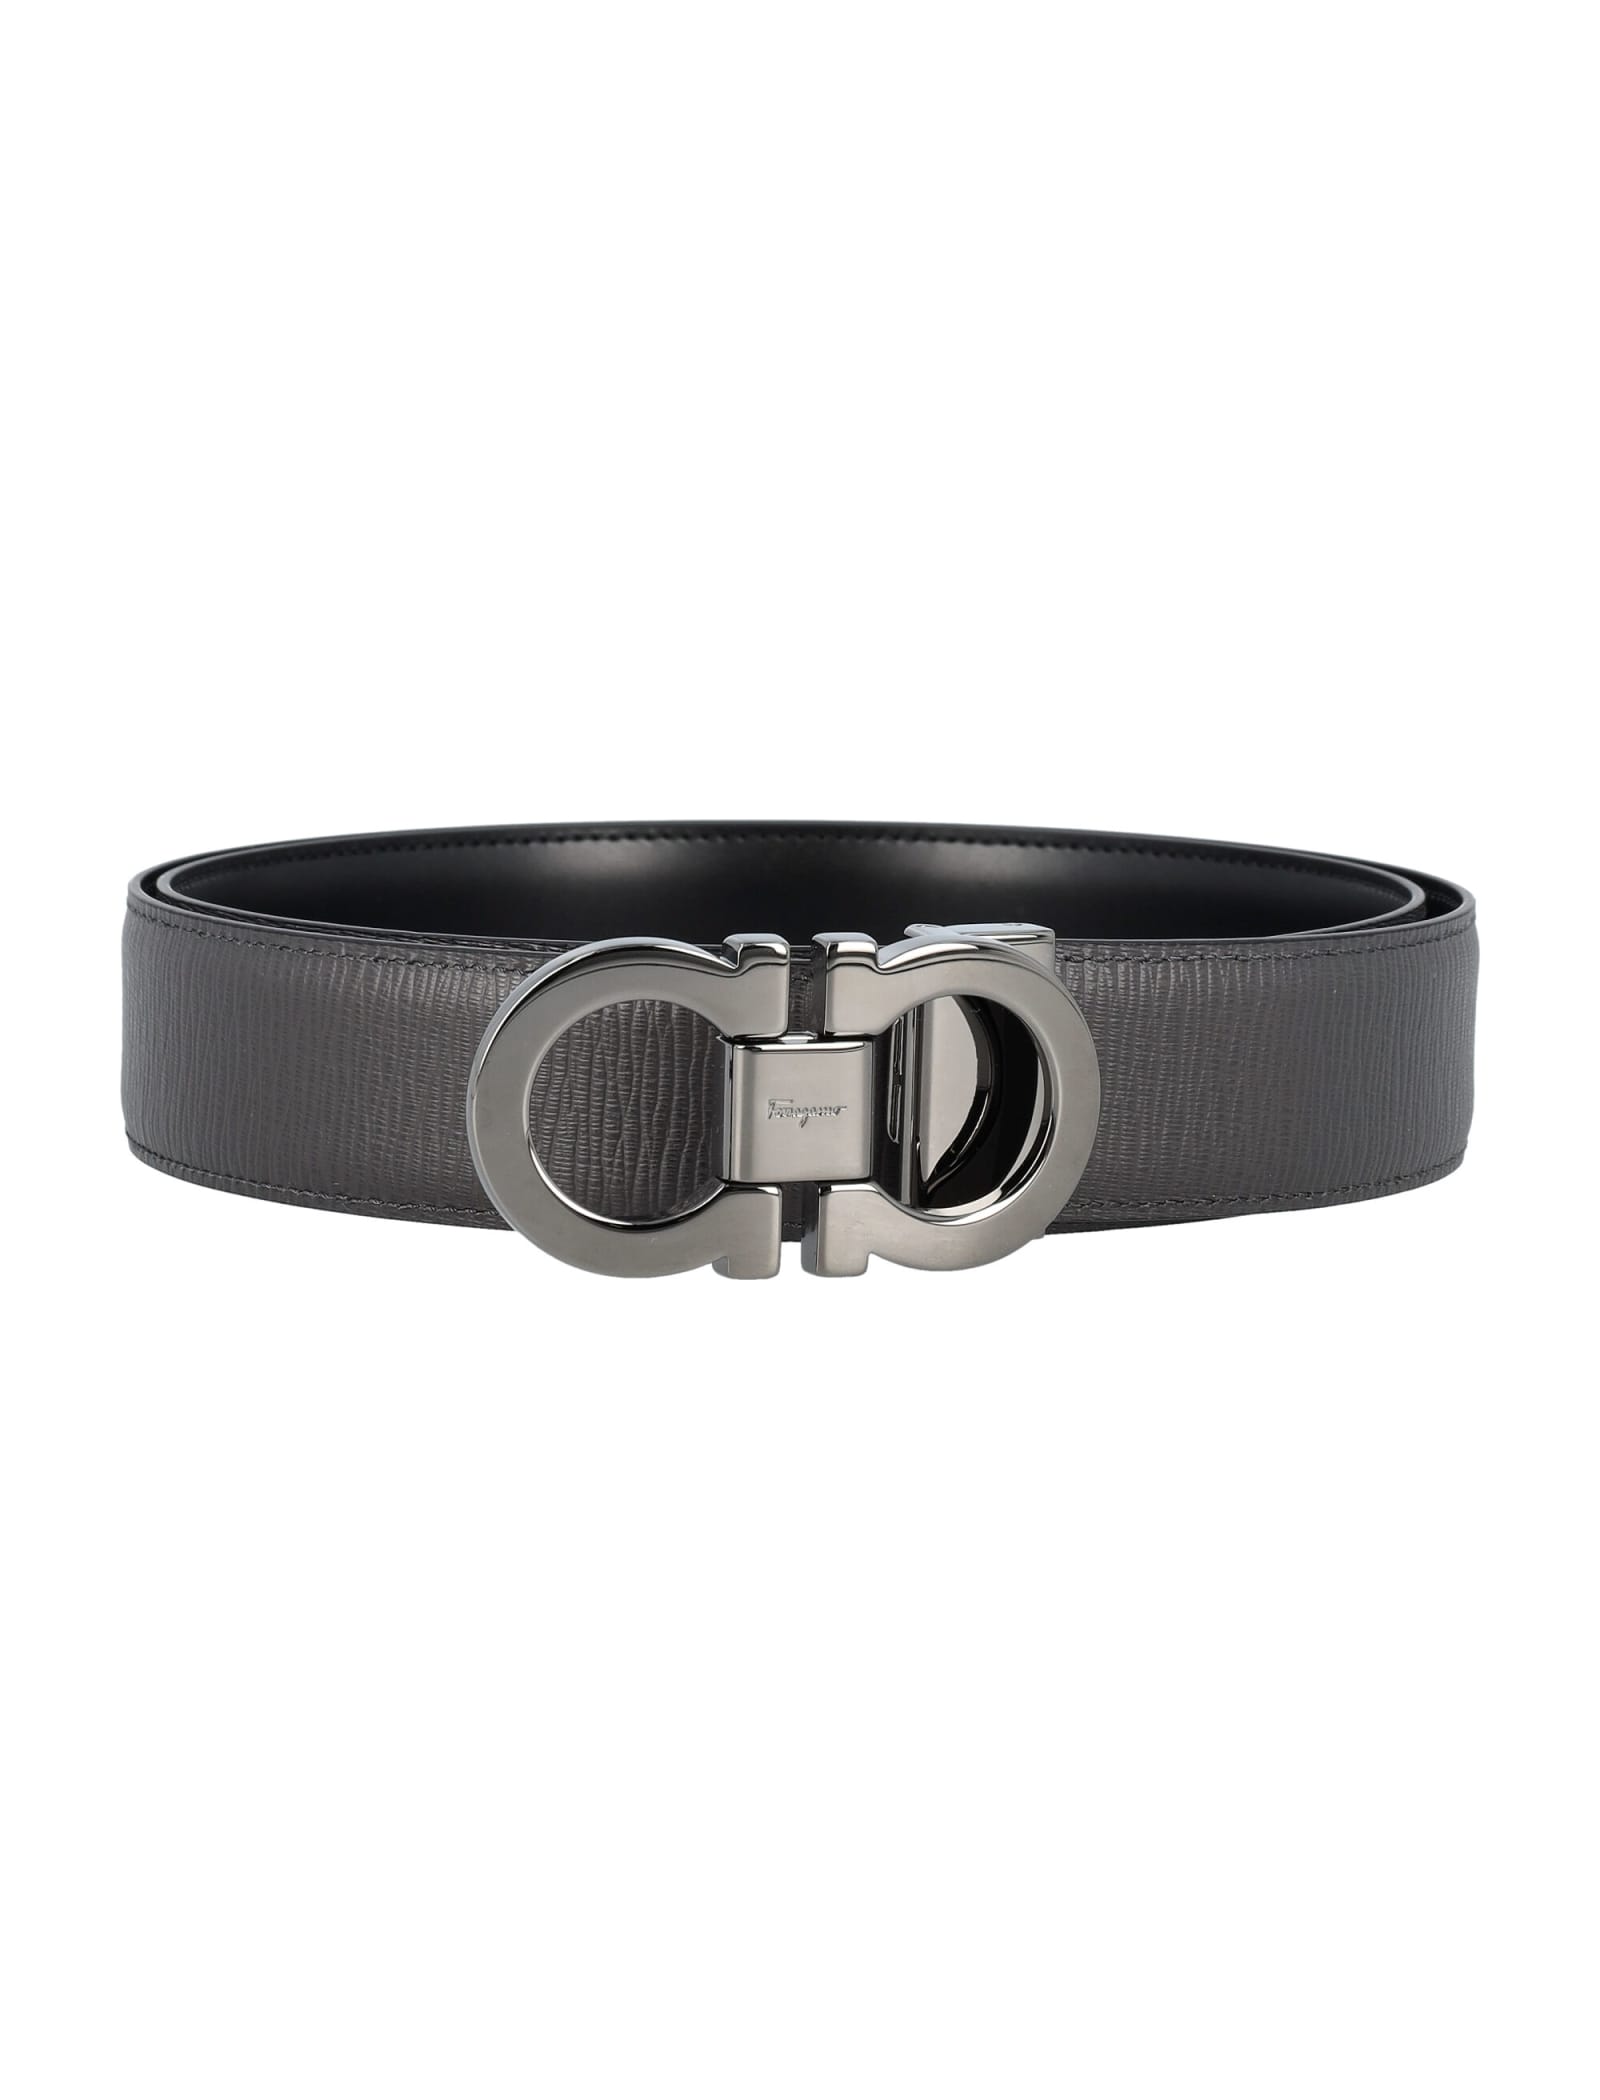 Belts Salvatore Ferragamo - Gancini leather adjustable belt -  679710686671014